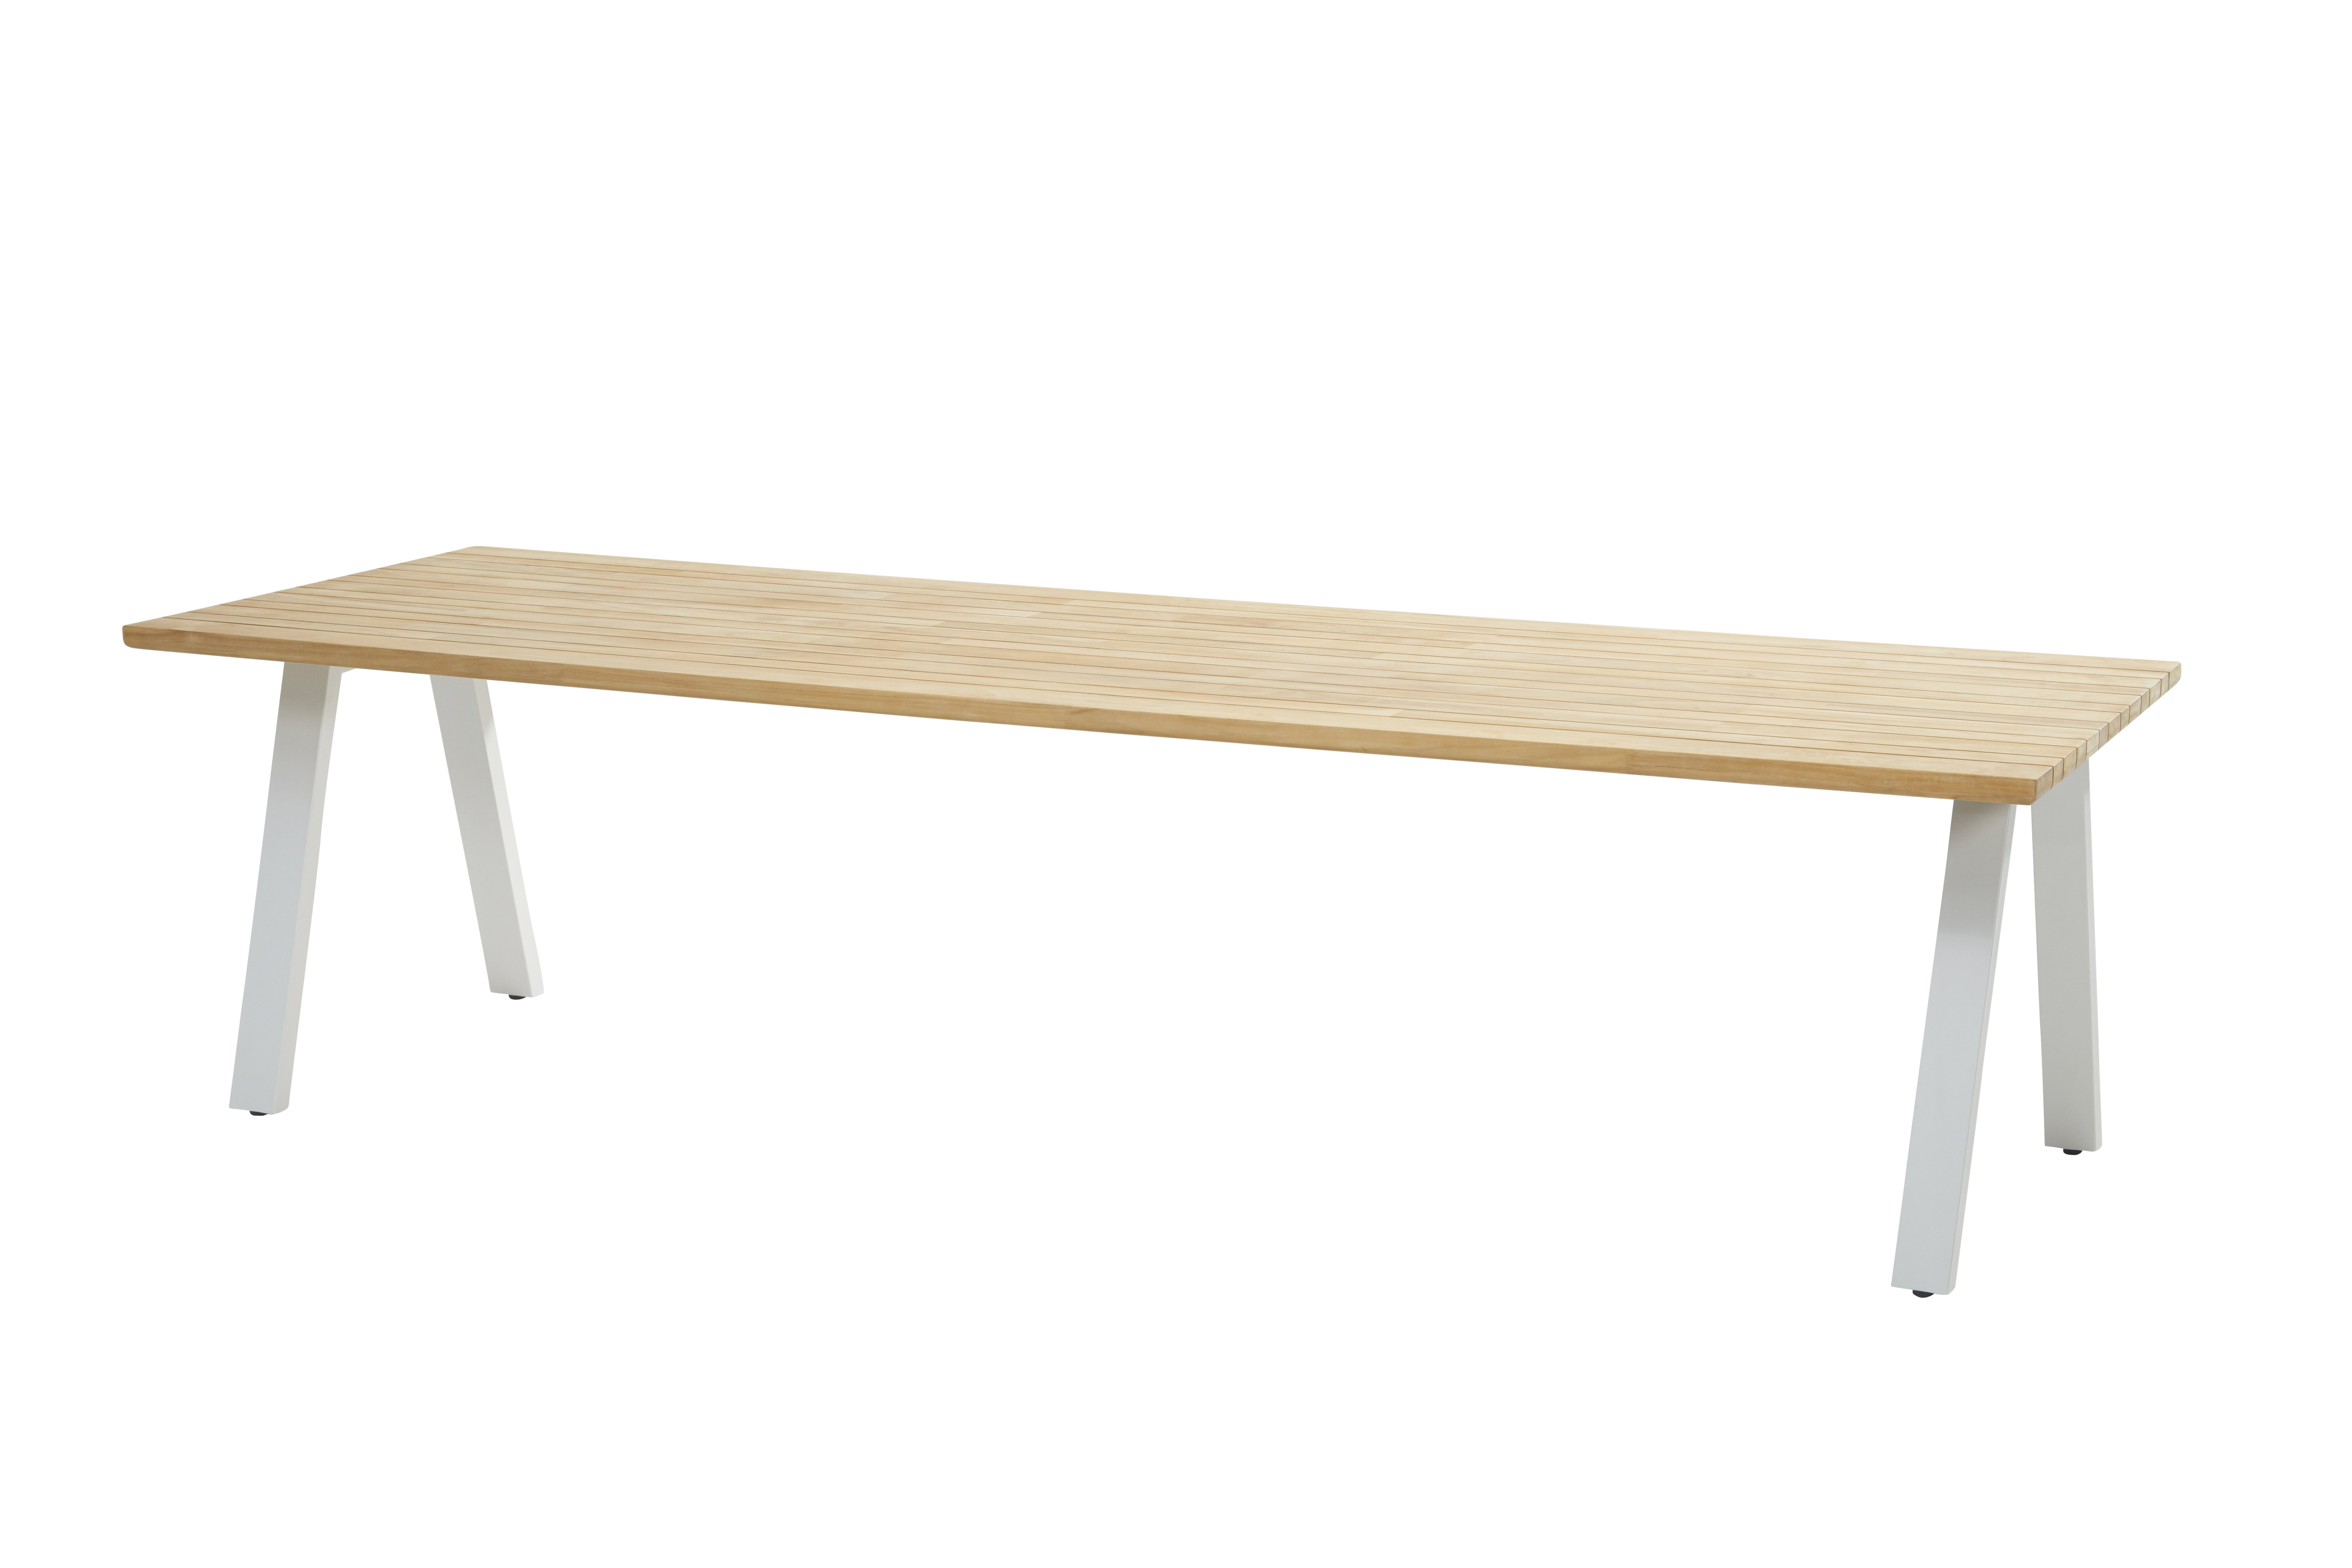 Ambassador set of legs for rectangular top frost grey + Ambassador table top natural teak 300x100